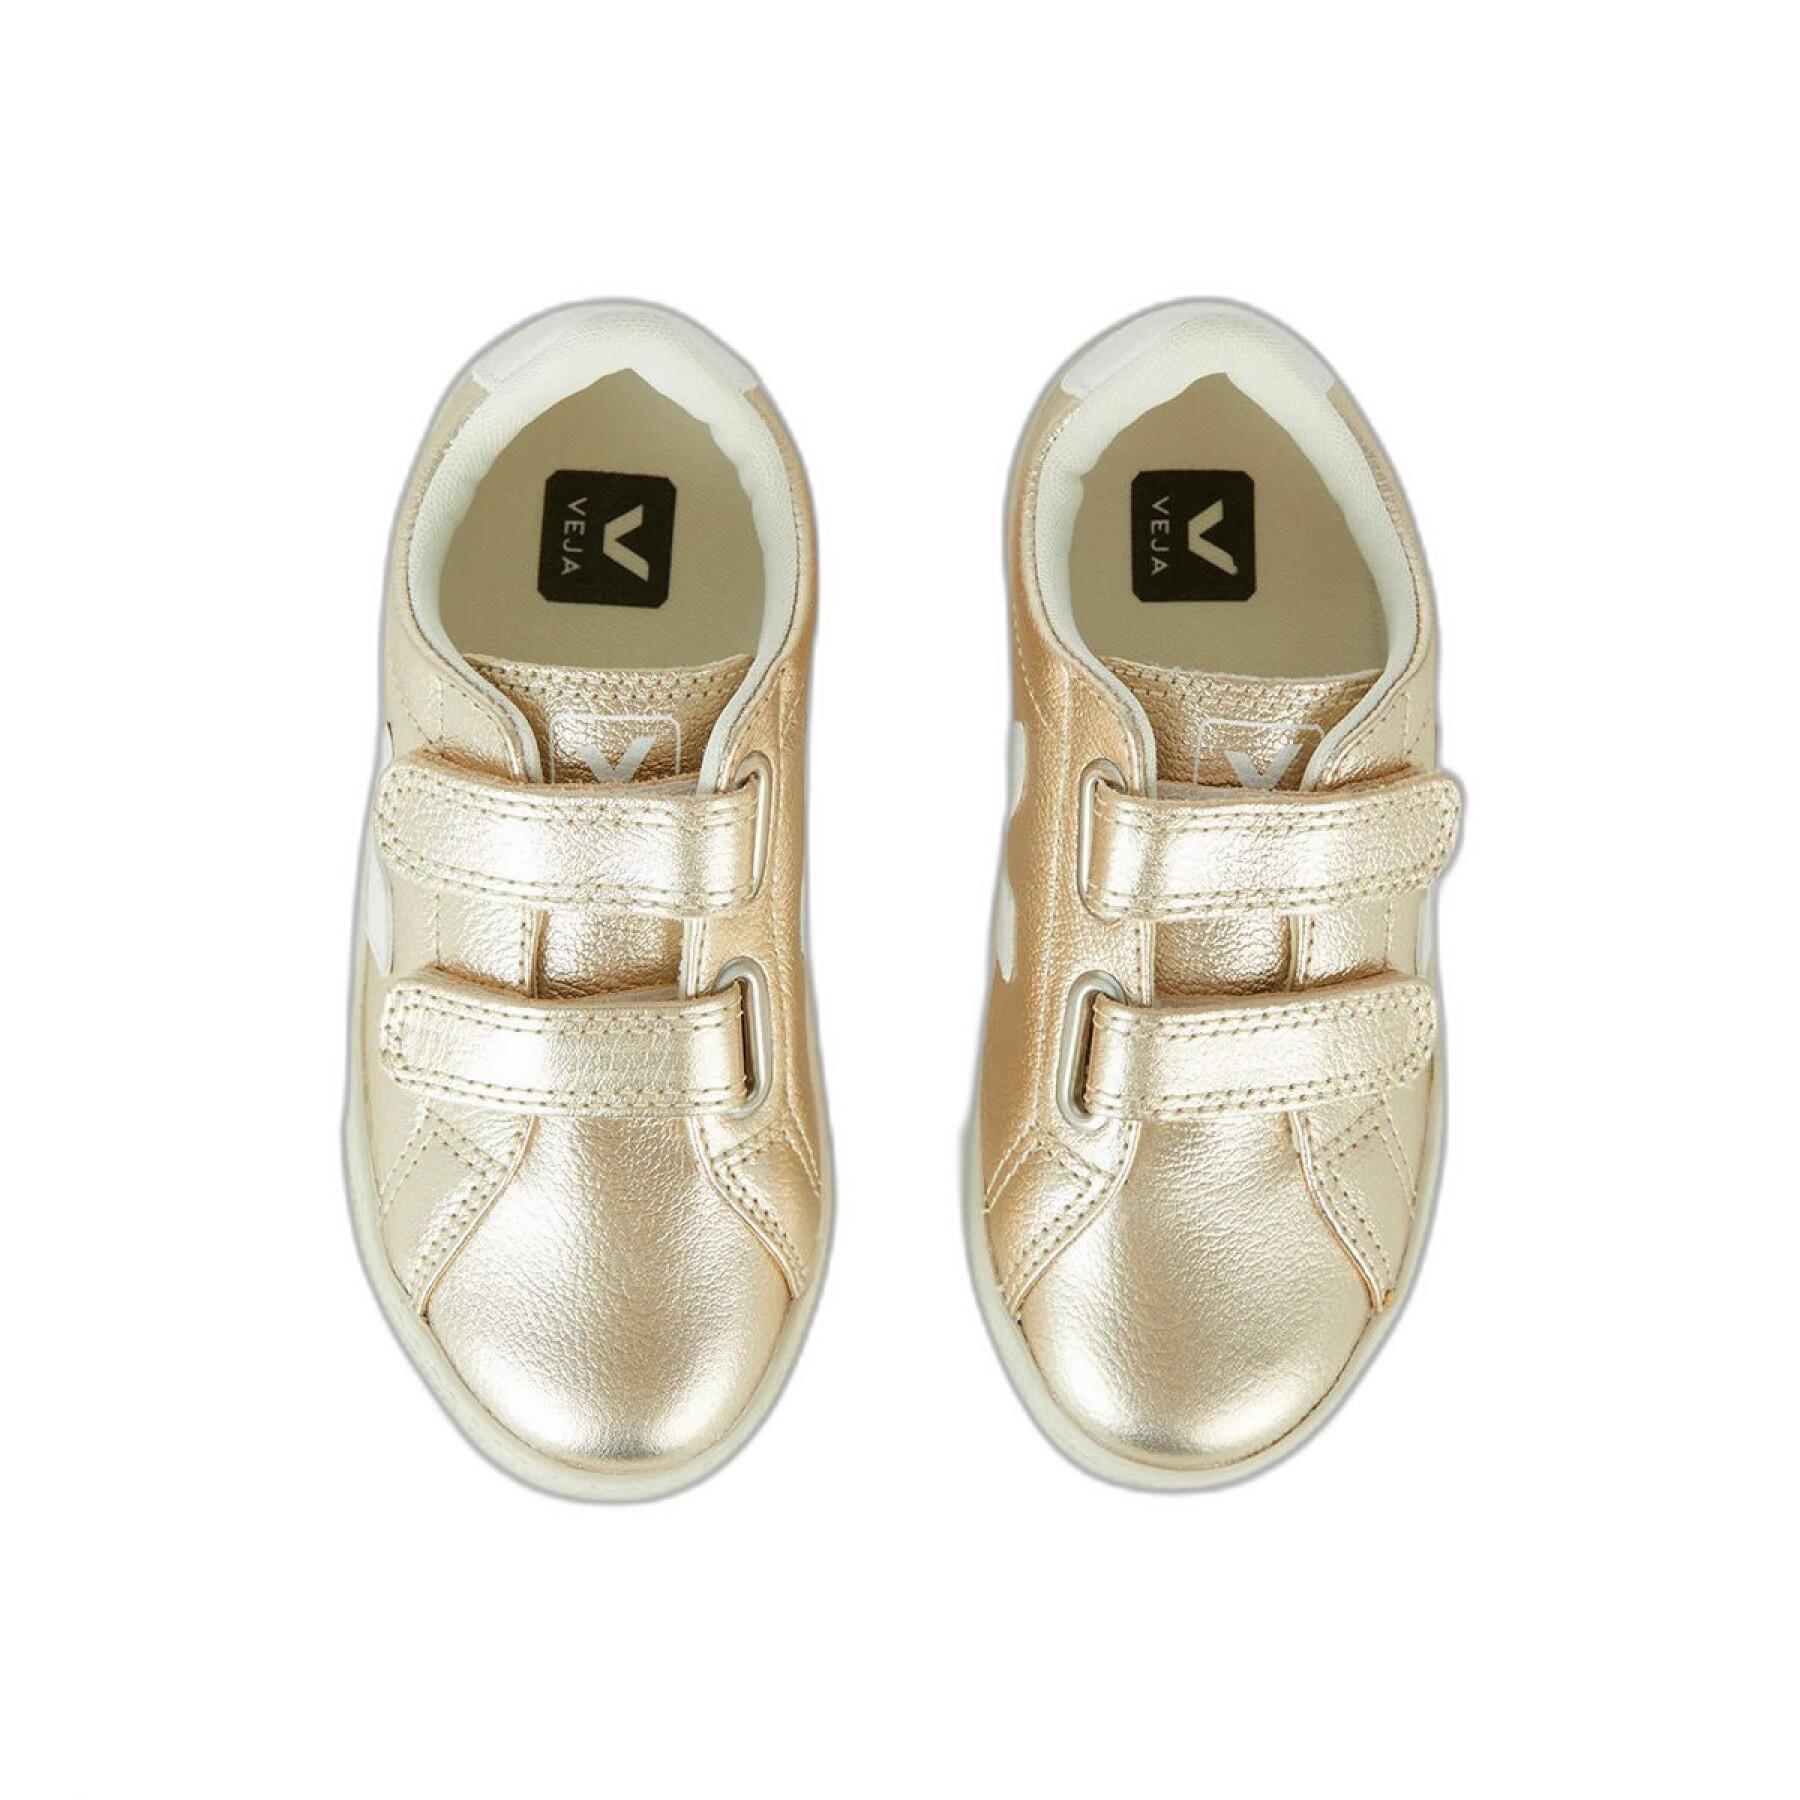 Baby sneakers Veja Small-Esplar-Velcro Chromefr